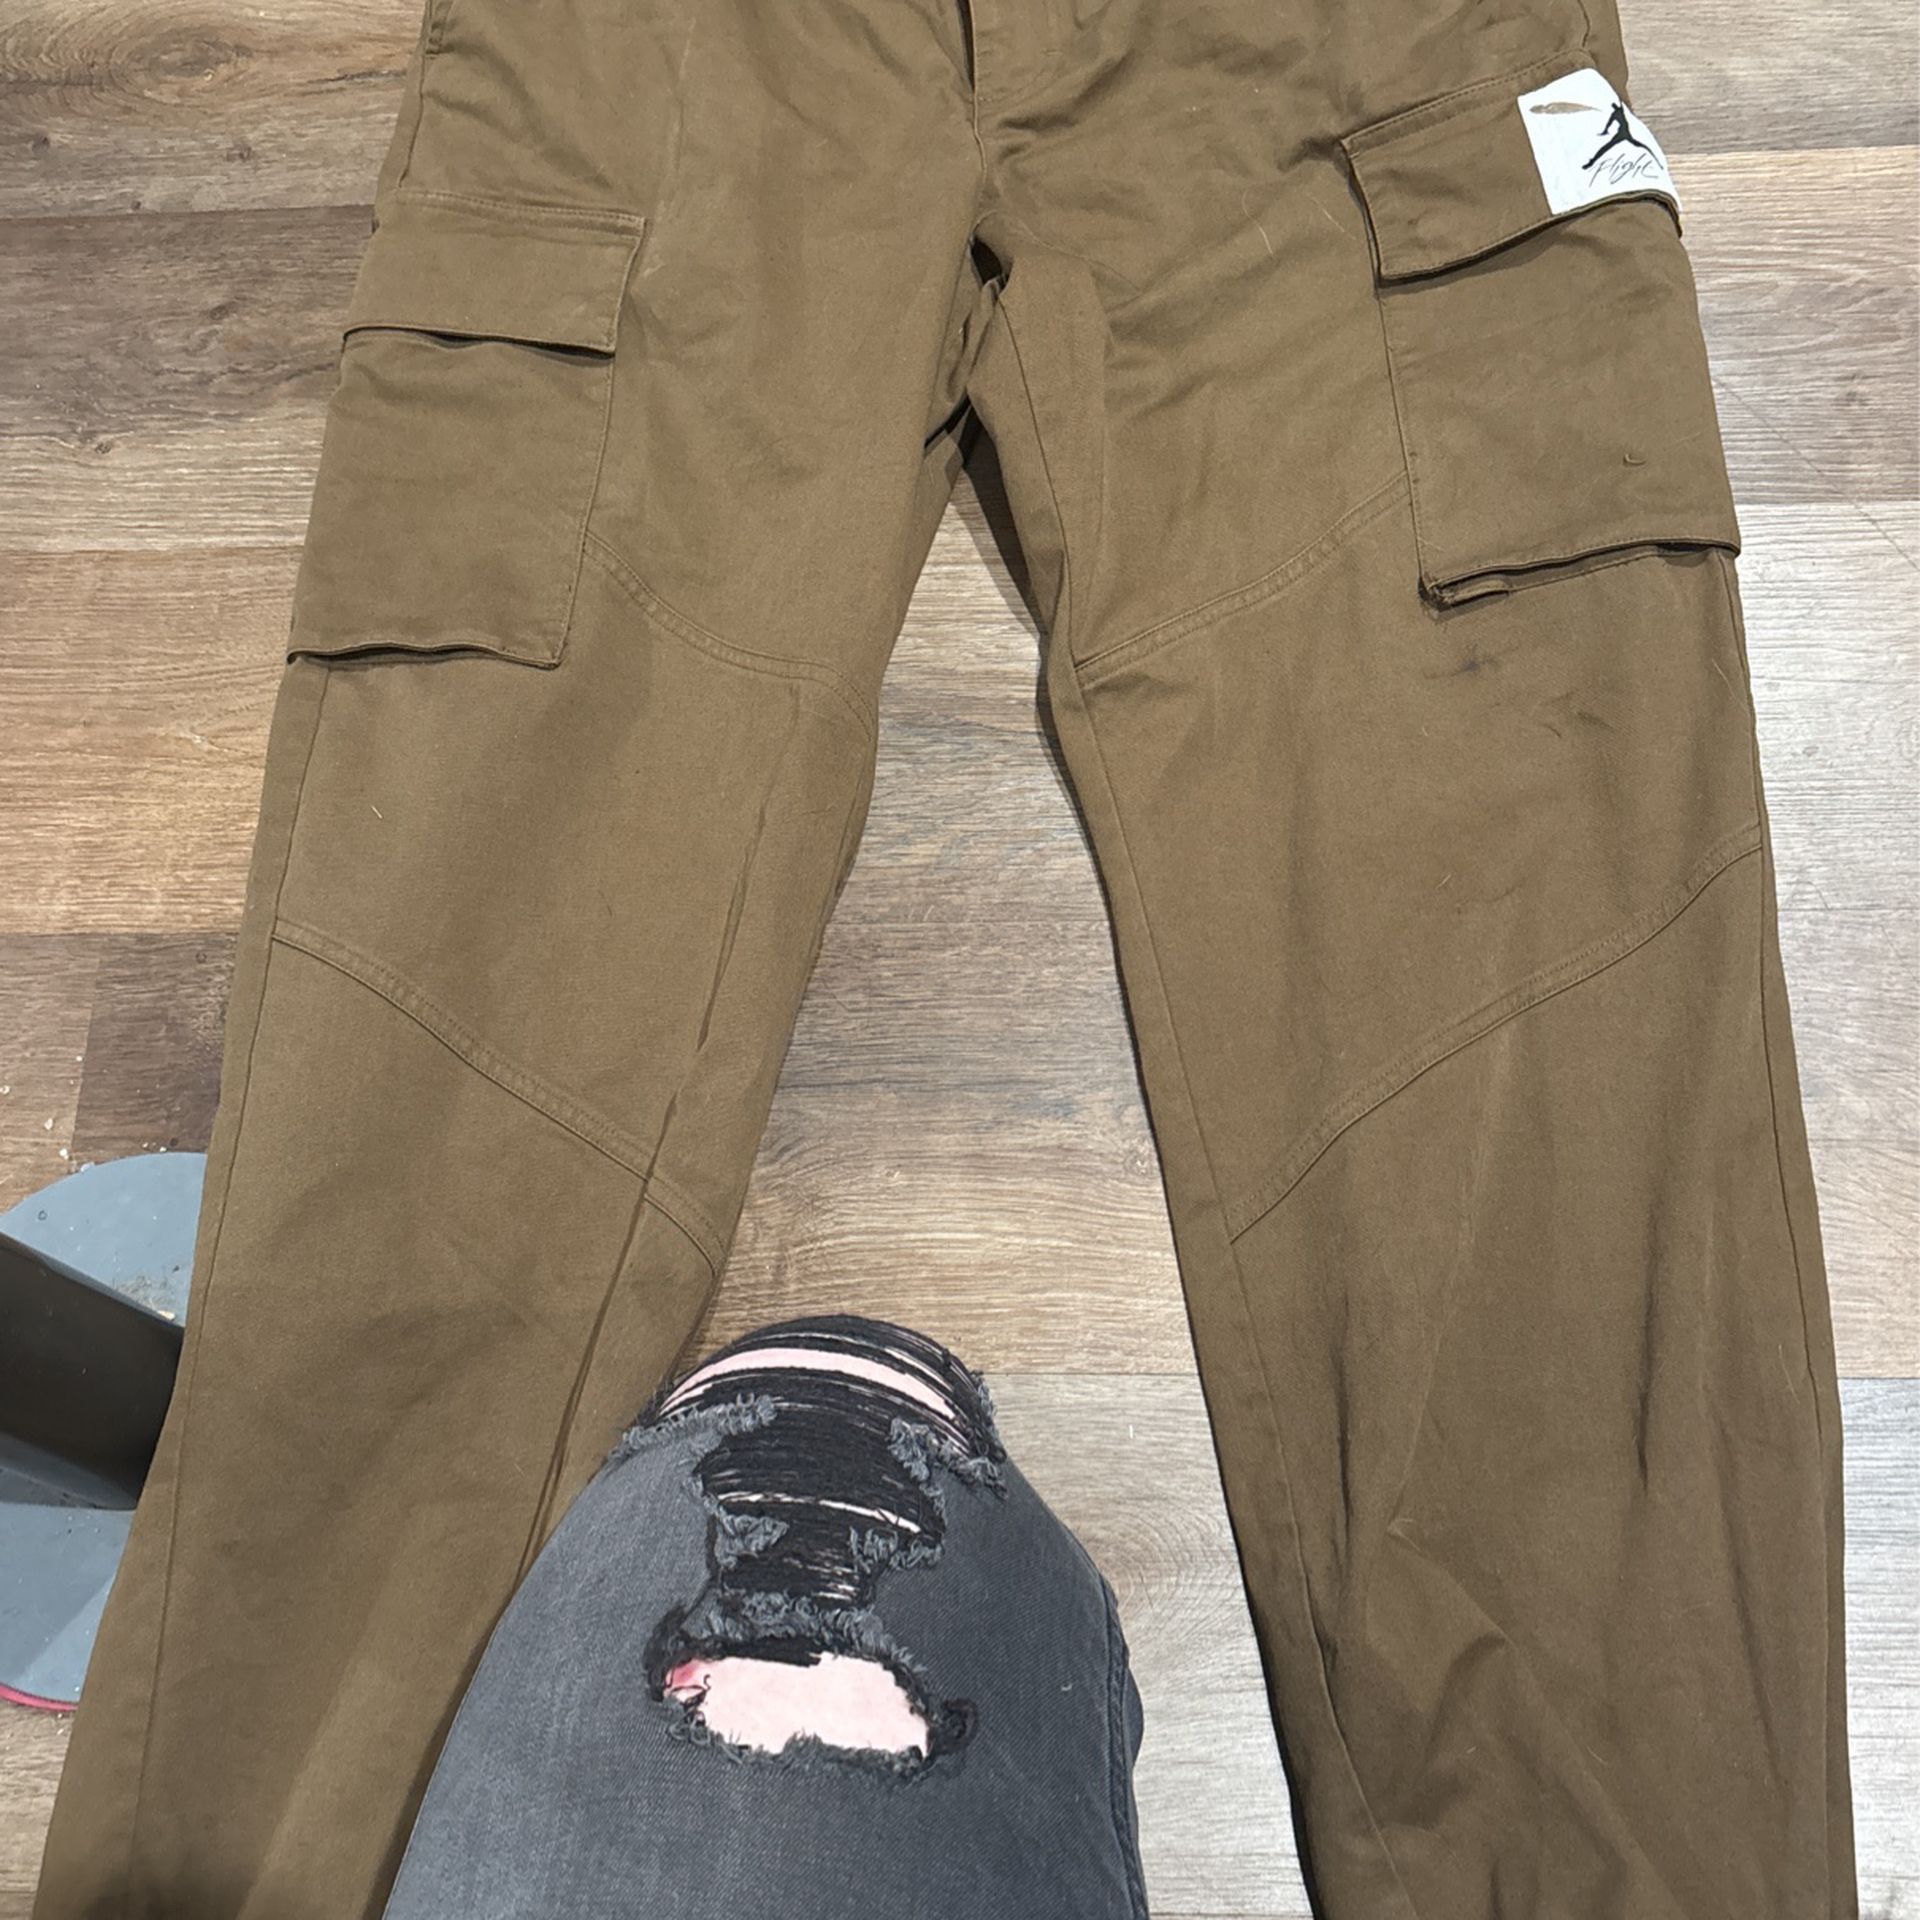 AirJordan Men’s Cargo Pants Brown Khaki Large